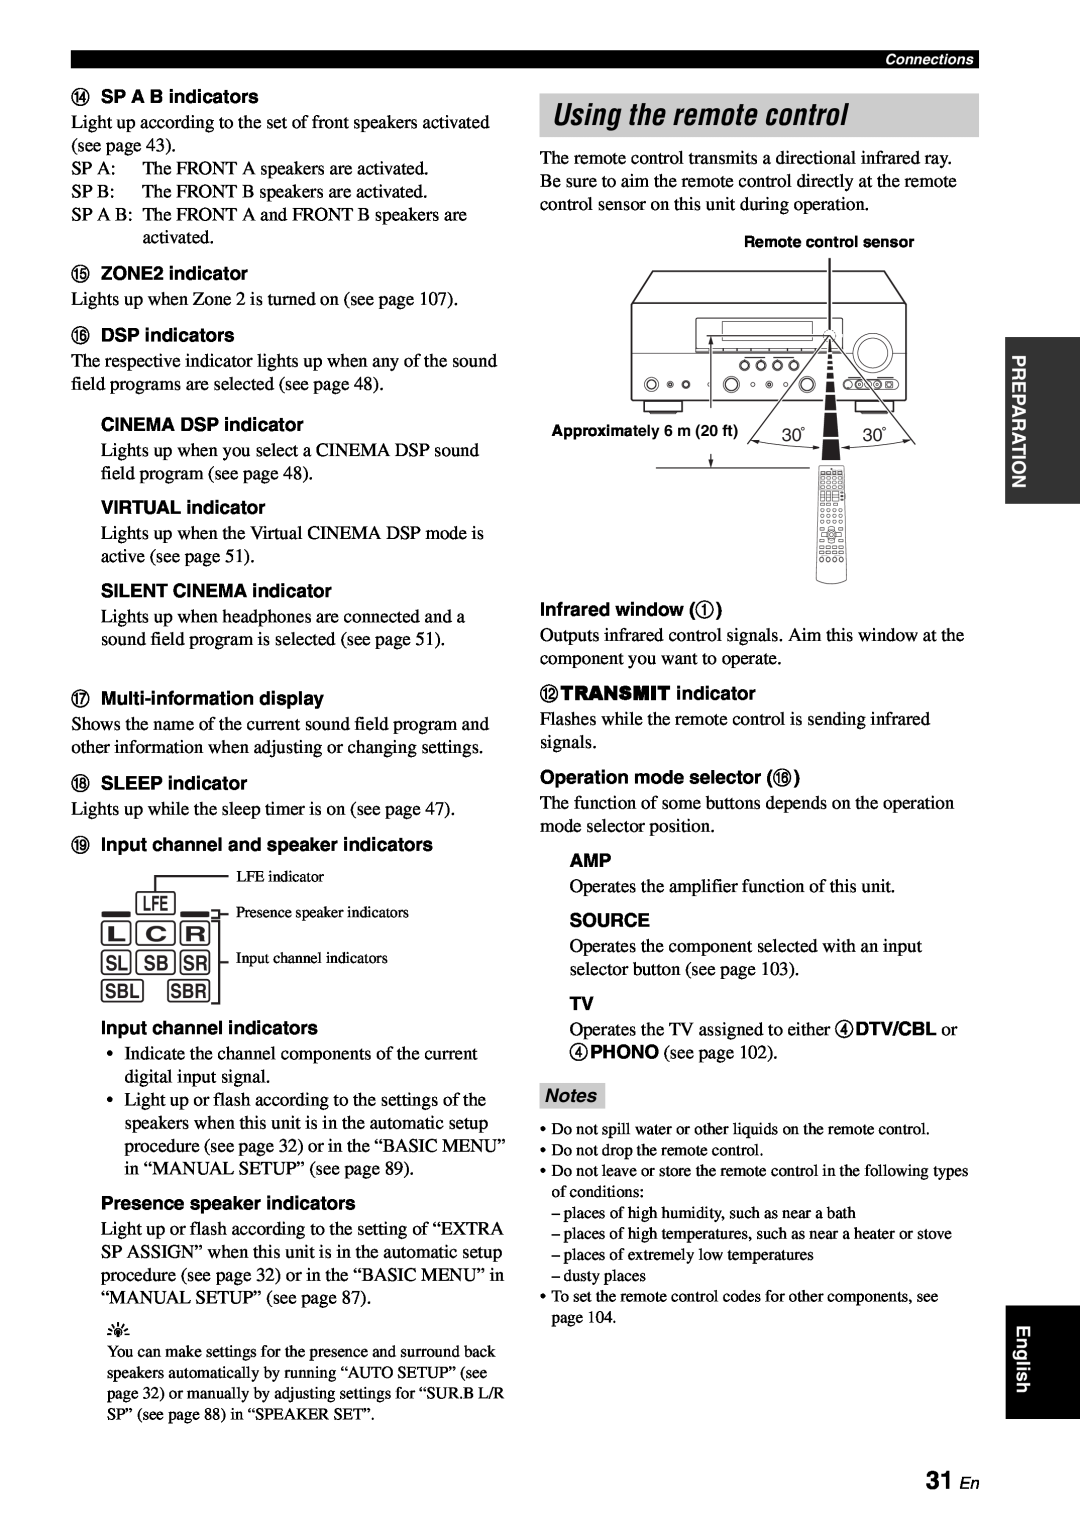 Yamaha RX-V863 owner manual Using the remote control, 31 En, L C R, Sl Sb Sr, Sbl Sbr, BTRANSMIT indicator, Notes 